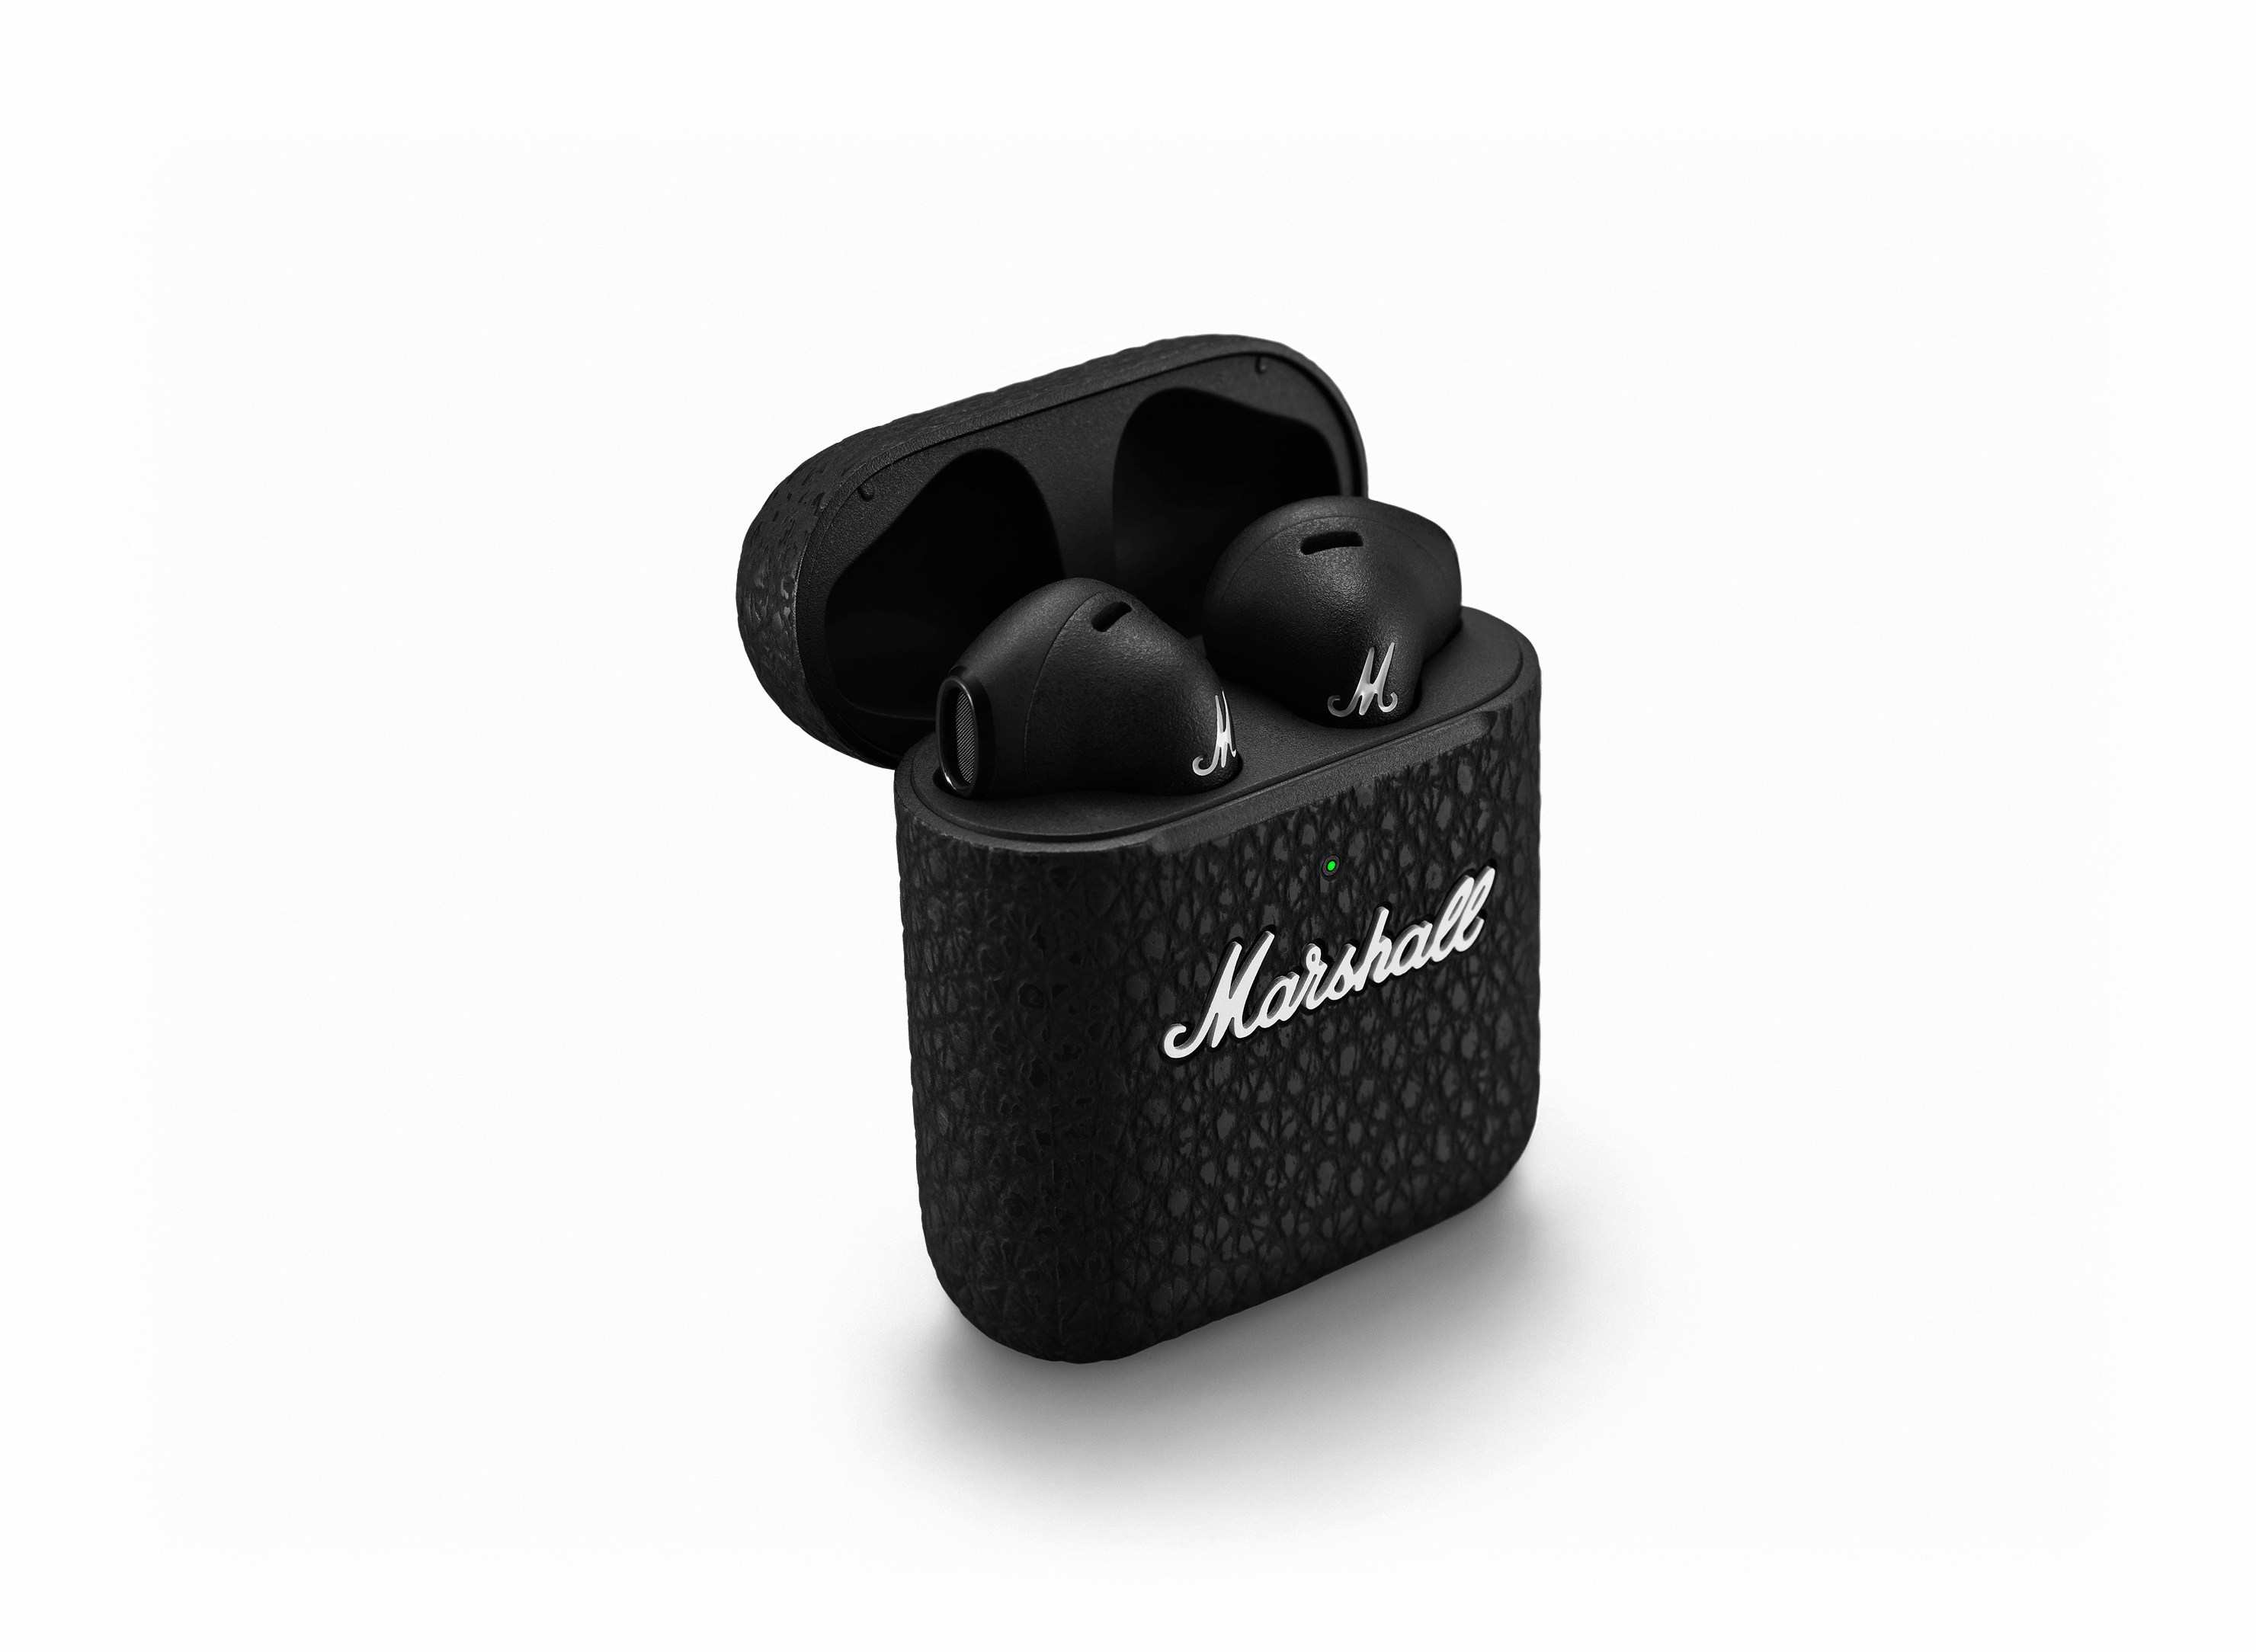 MARSHALL MINOR III, In-ear Bluetooth Schwarz Kopfhörer